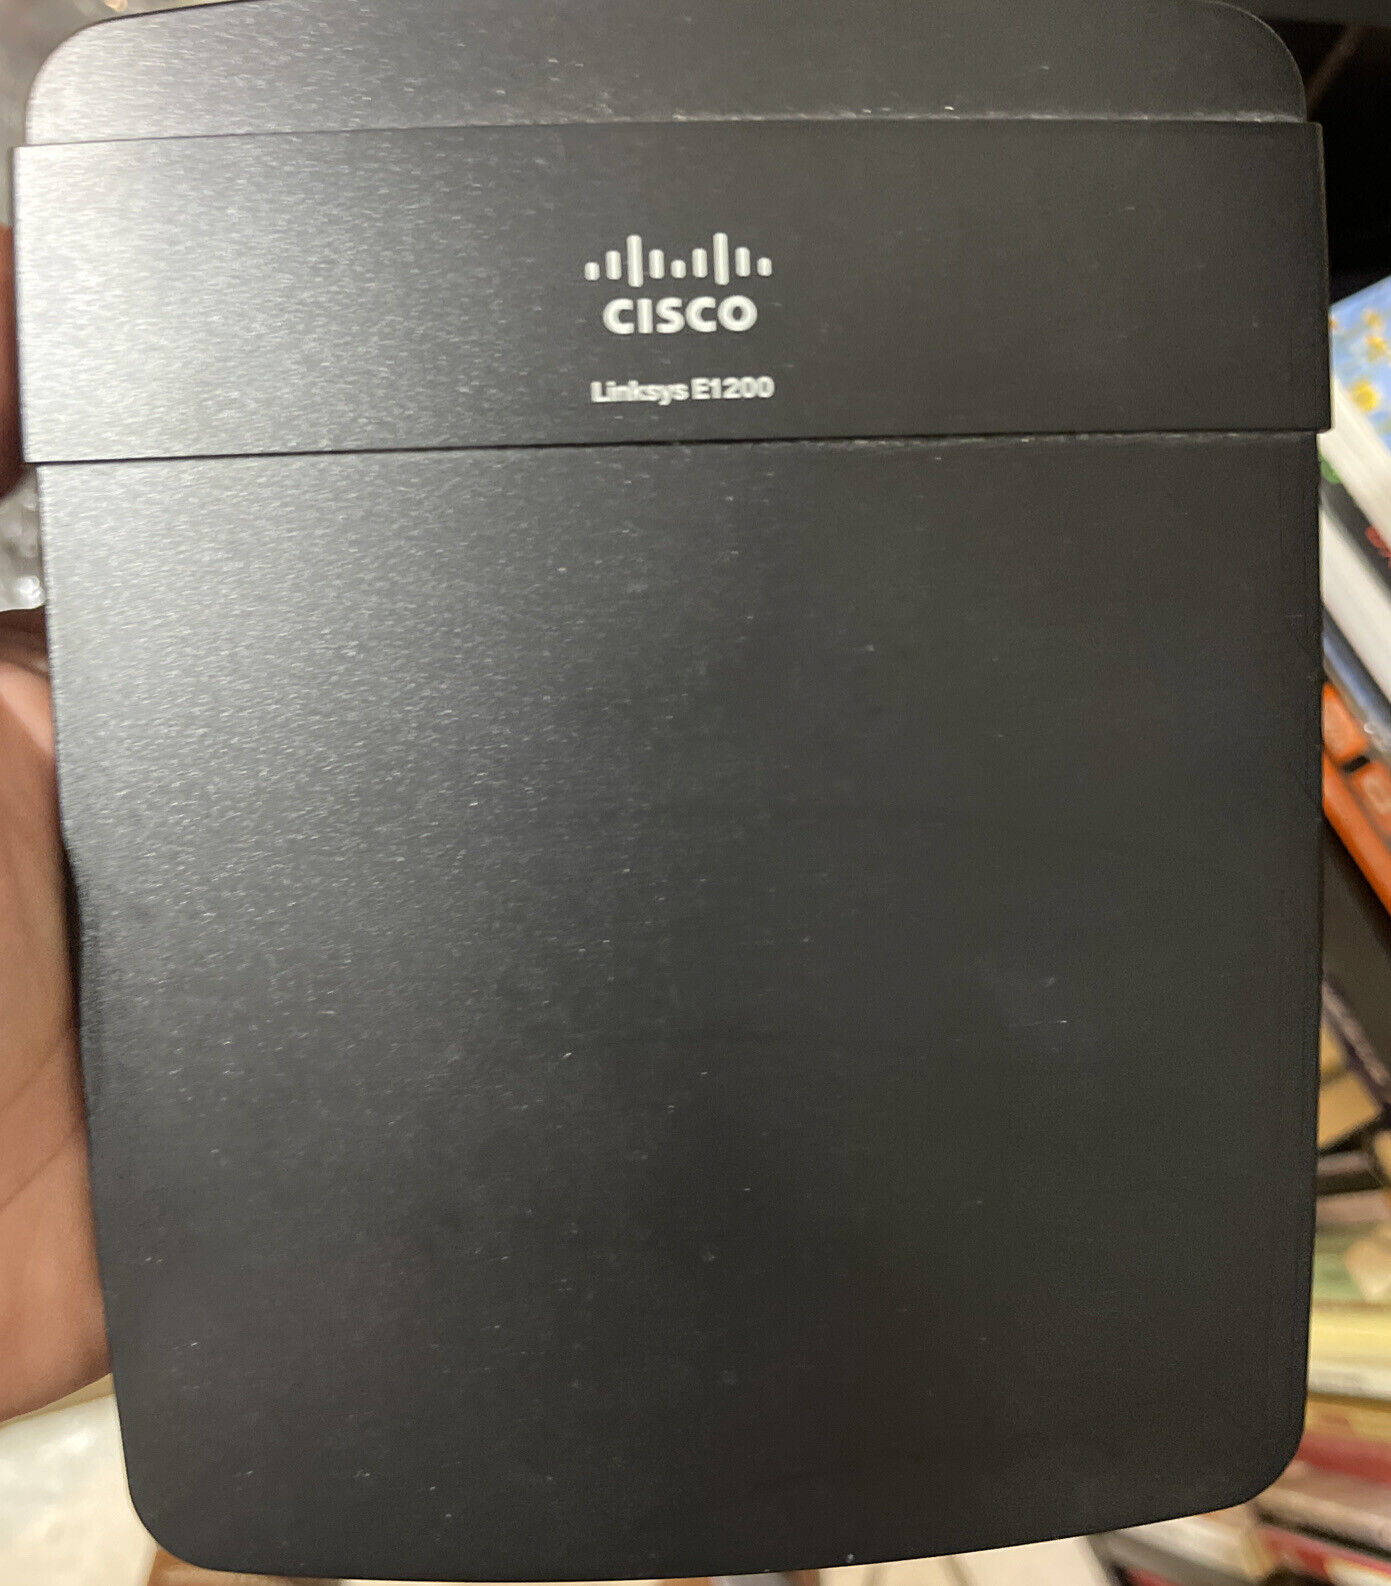 Cisco: Linksys#E1200 4-Port Gigabit Ethernet Dual-Band Wireless Router & Adapter